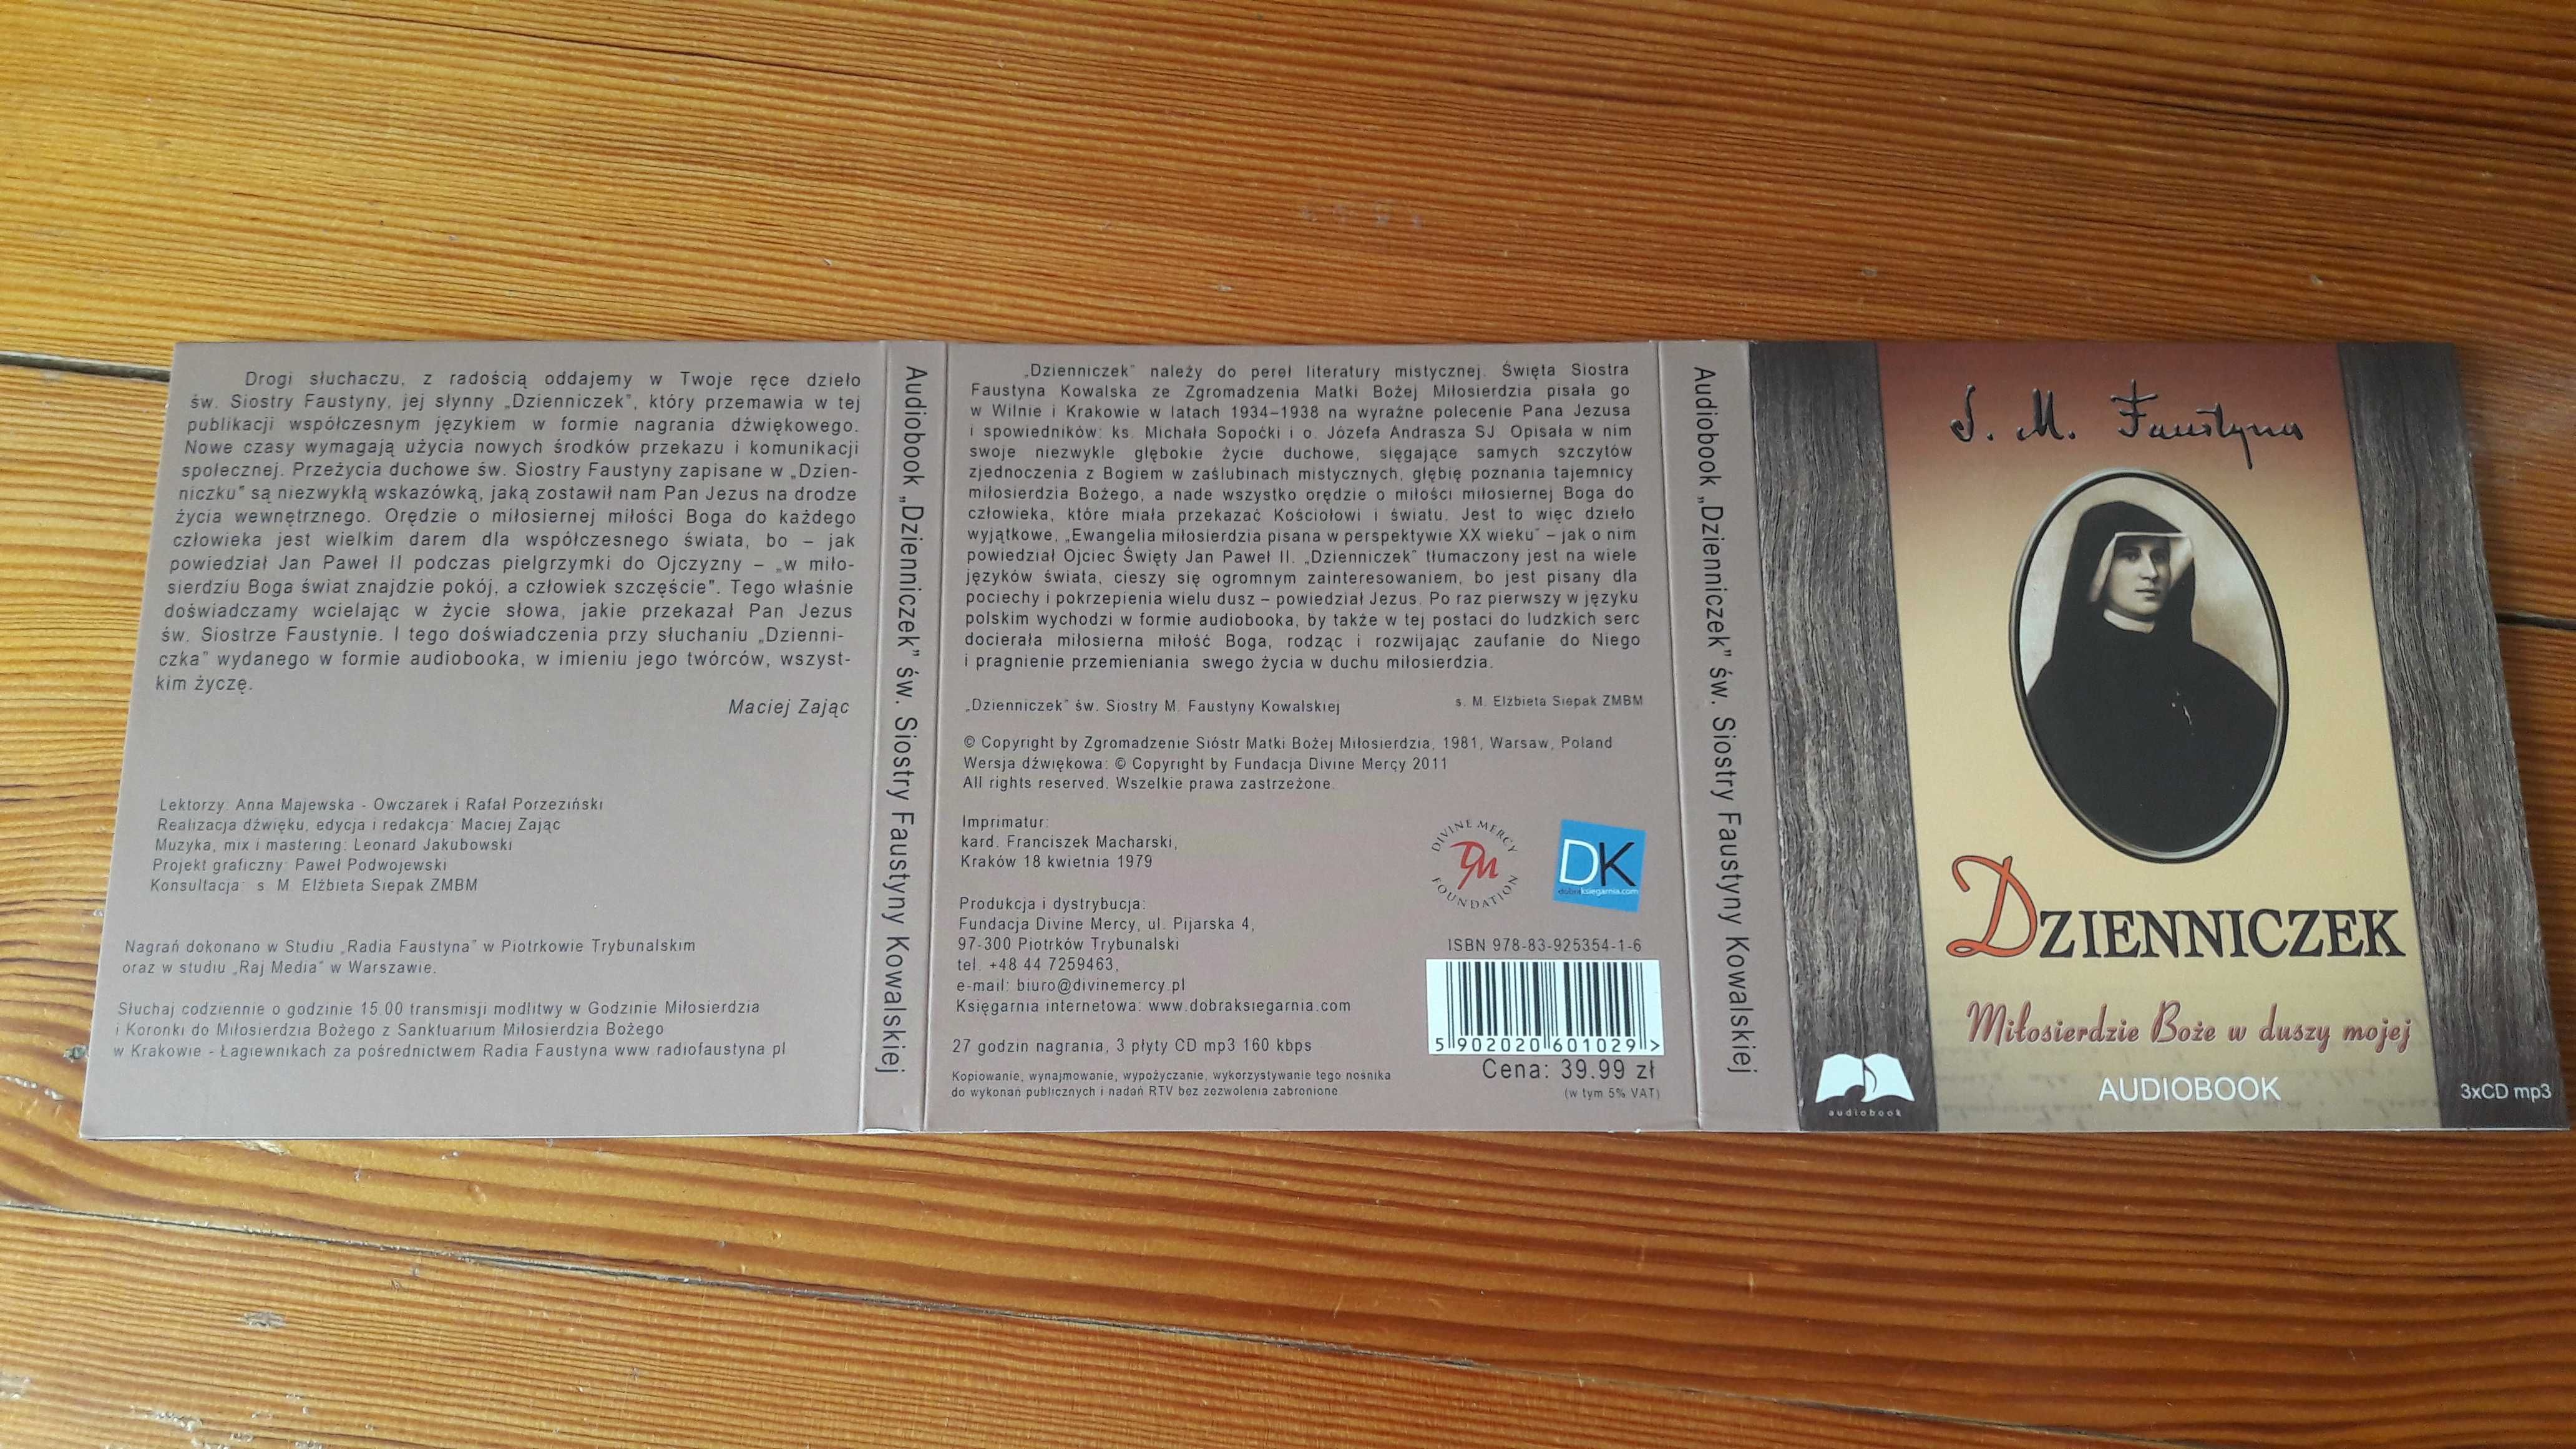 Dzienniczek S.M. Faustyny audiobook 3xCD mp3